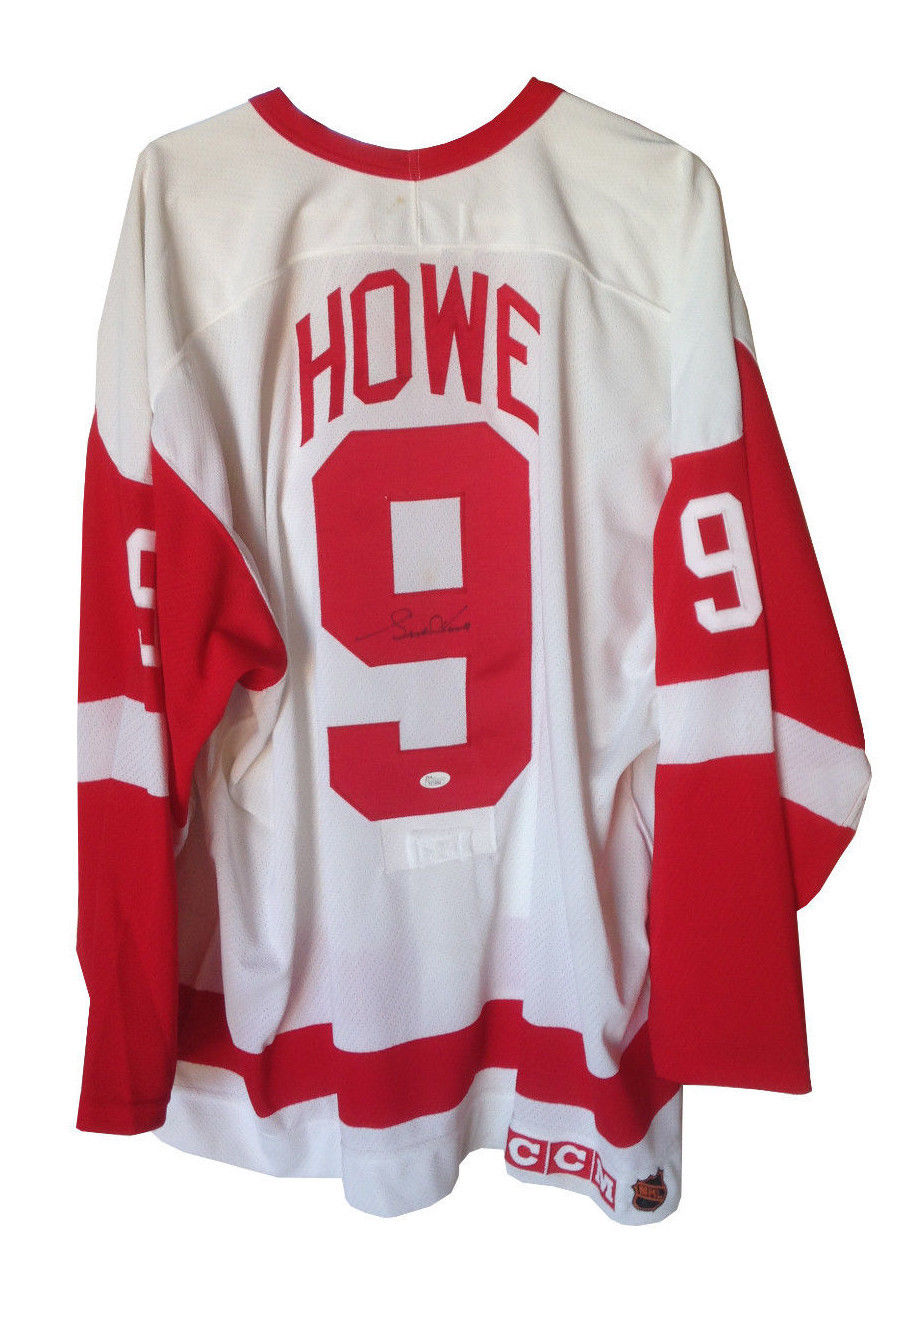 Gordie Howe Signed Red Wings National Hockey League Program (Beckett LOA)